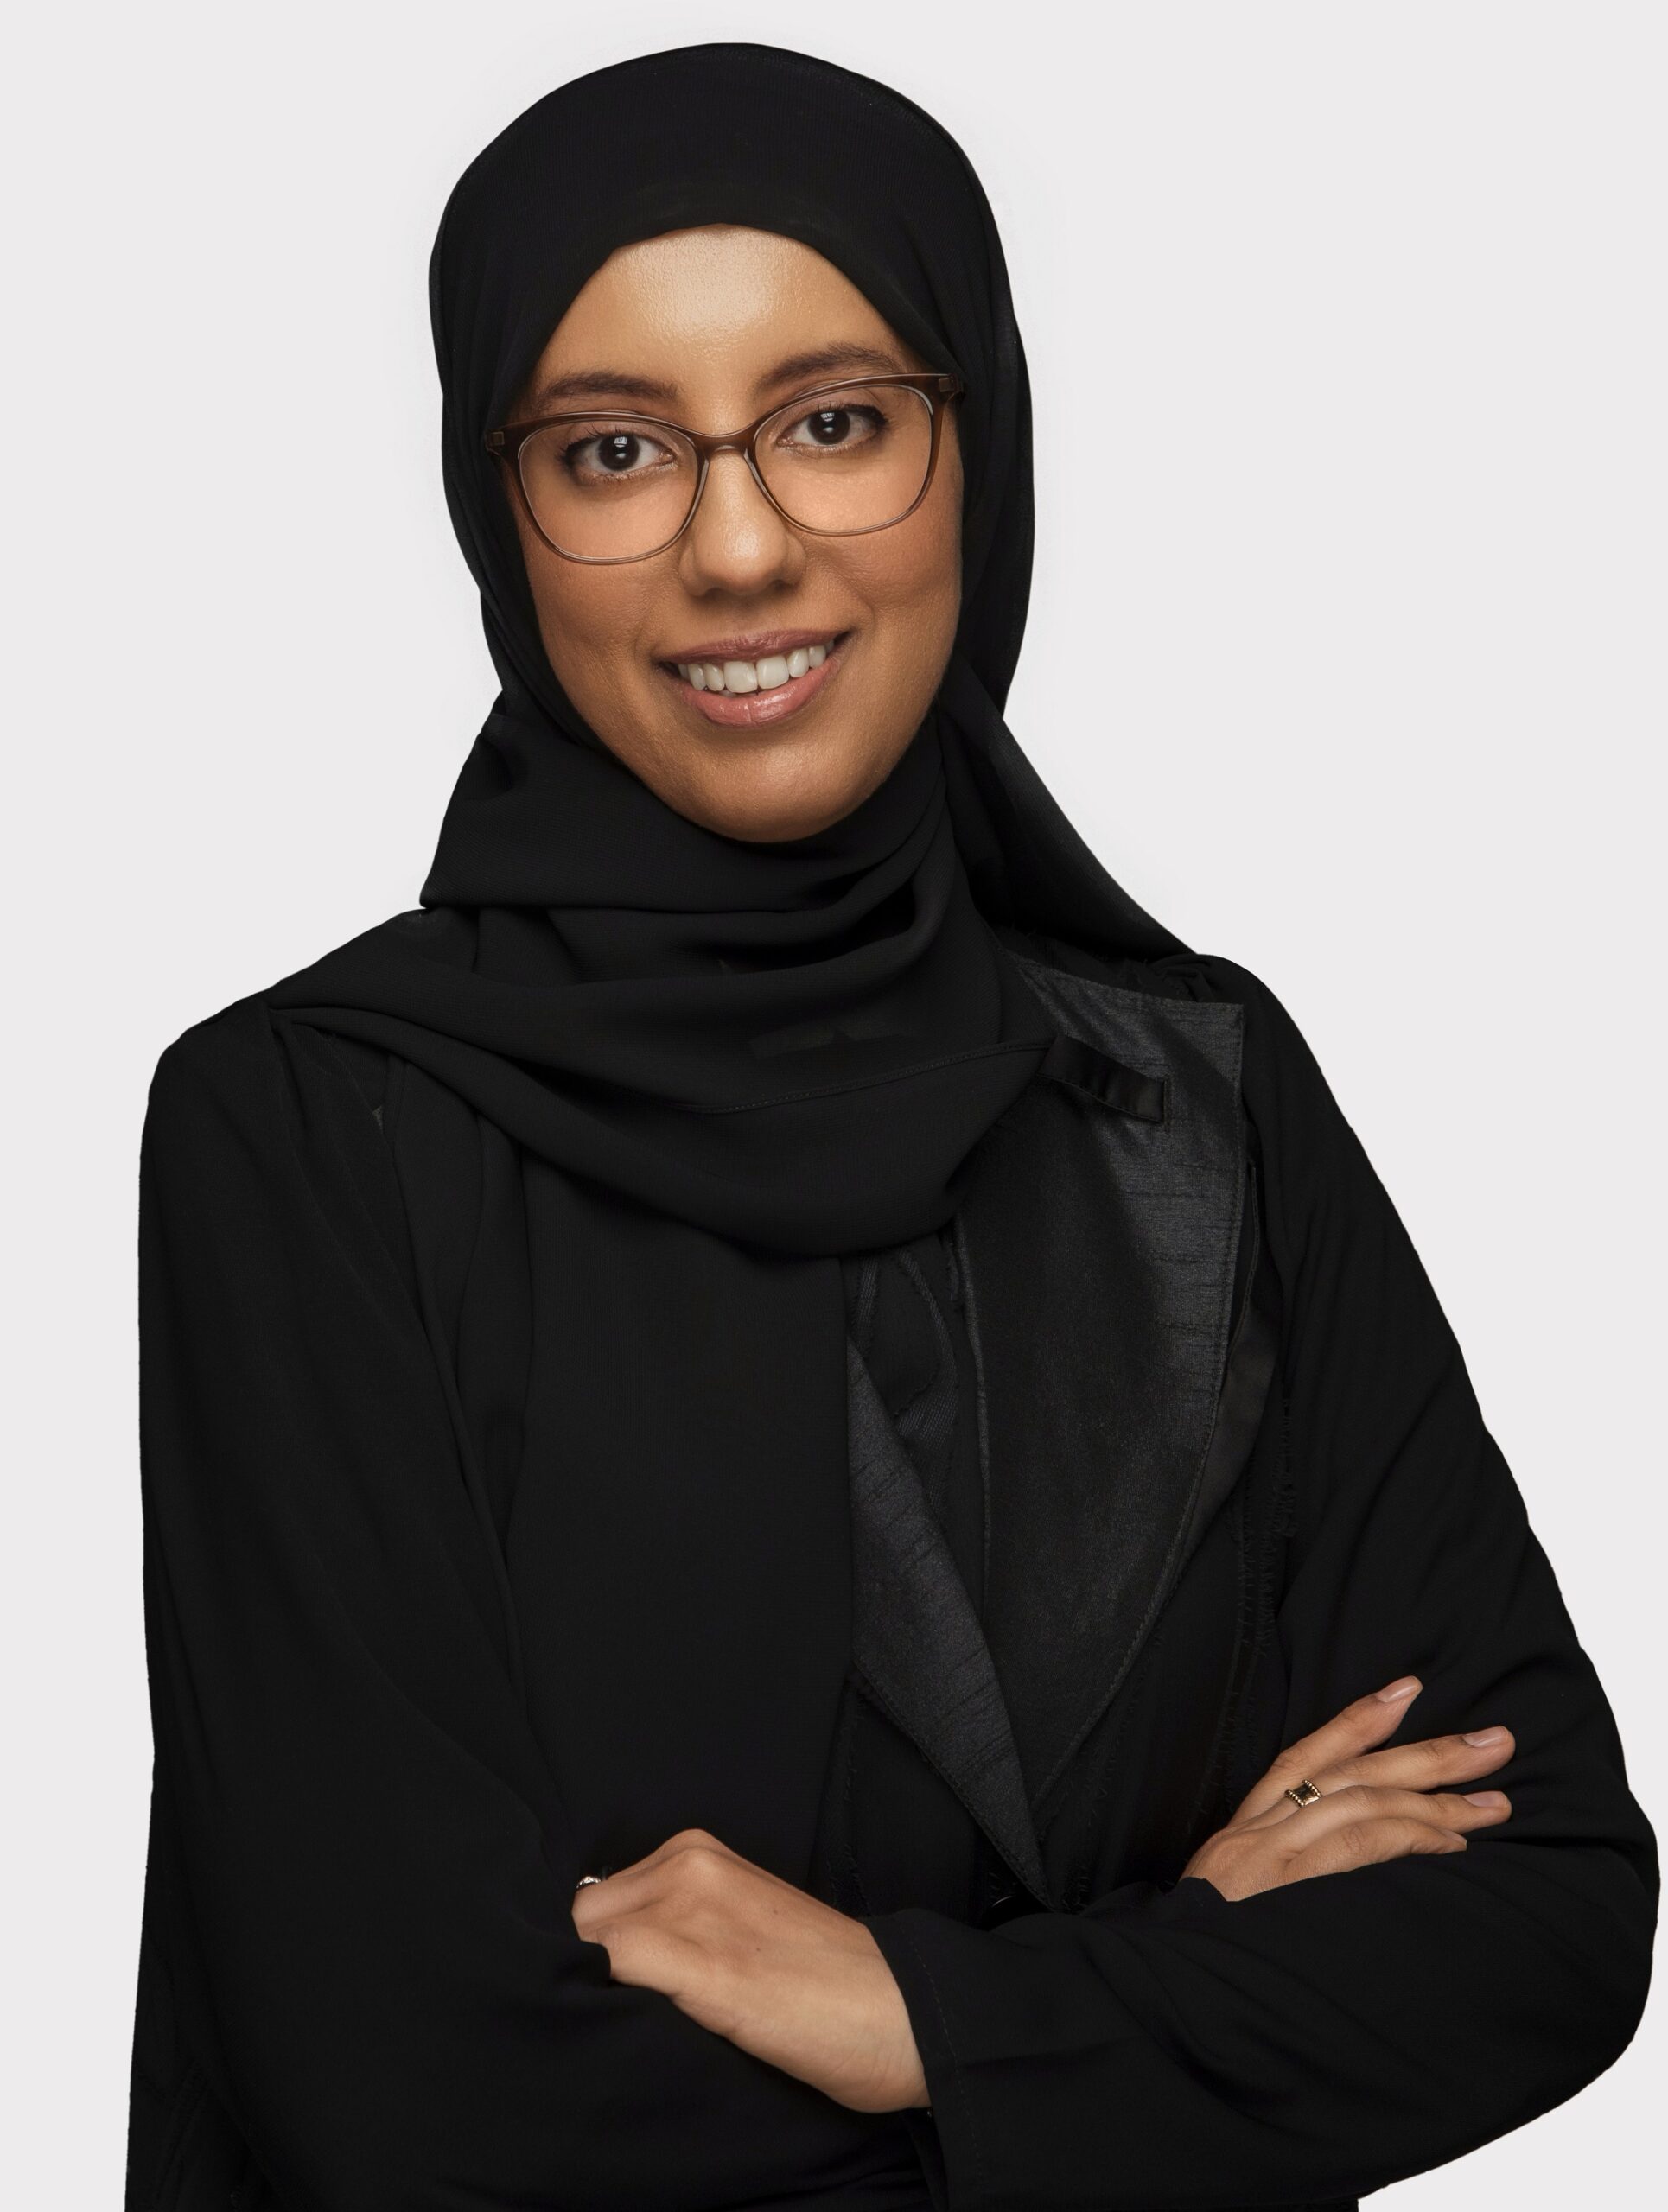 Fatma Belrehif, Chief Executive Officer of Dubai Schools Inspection Bureau